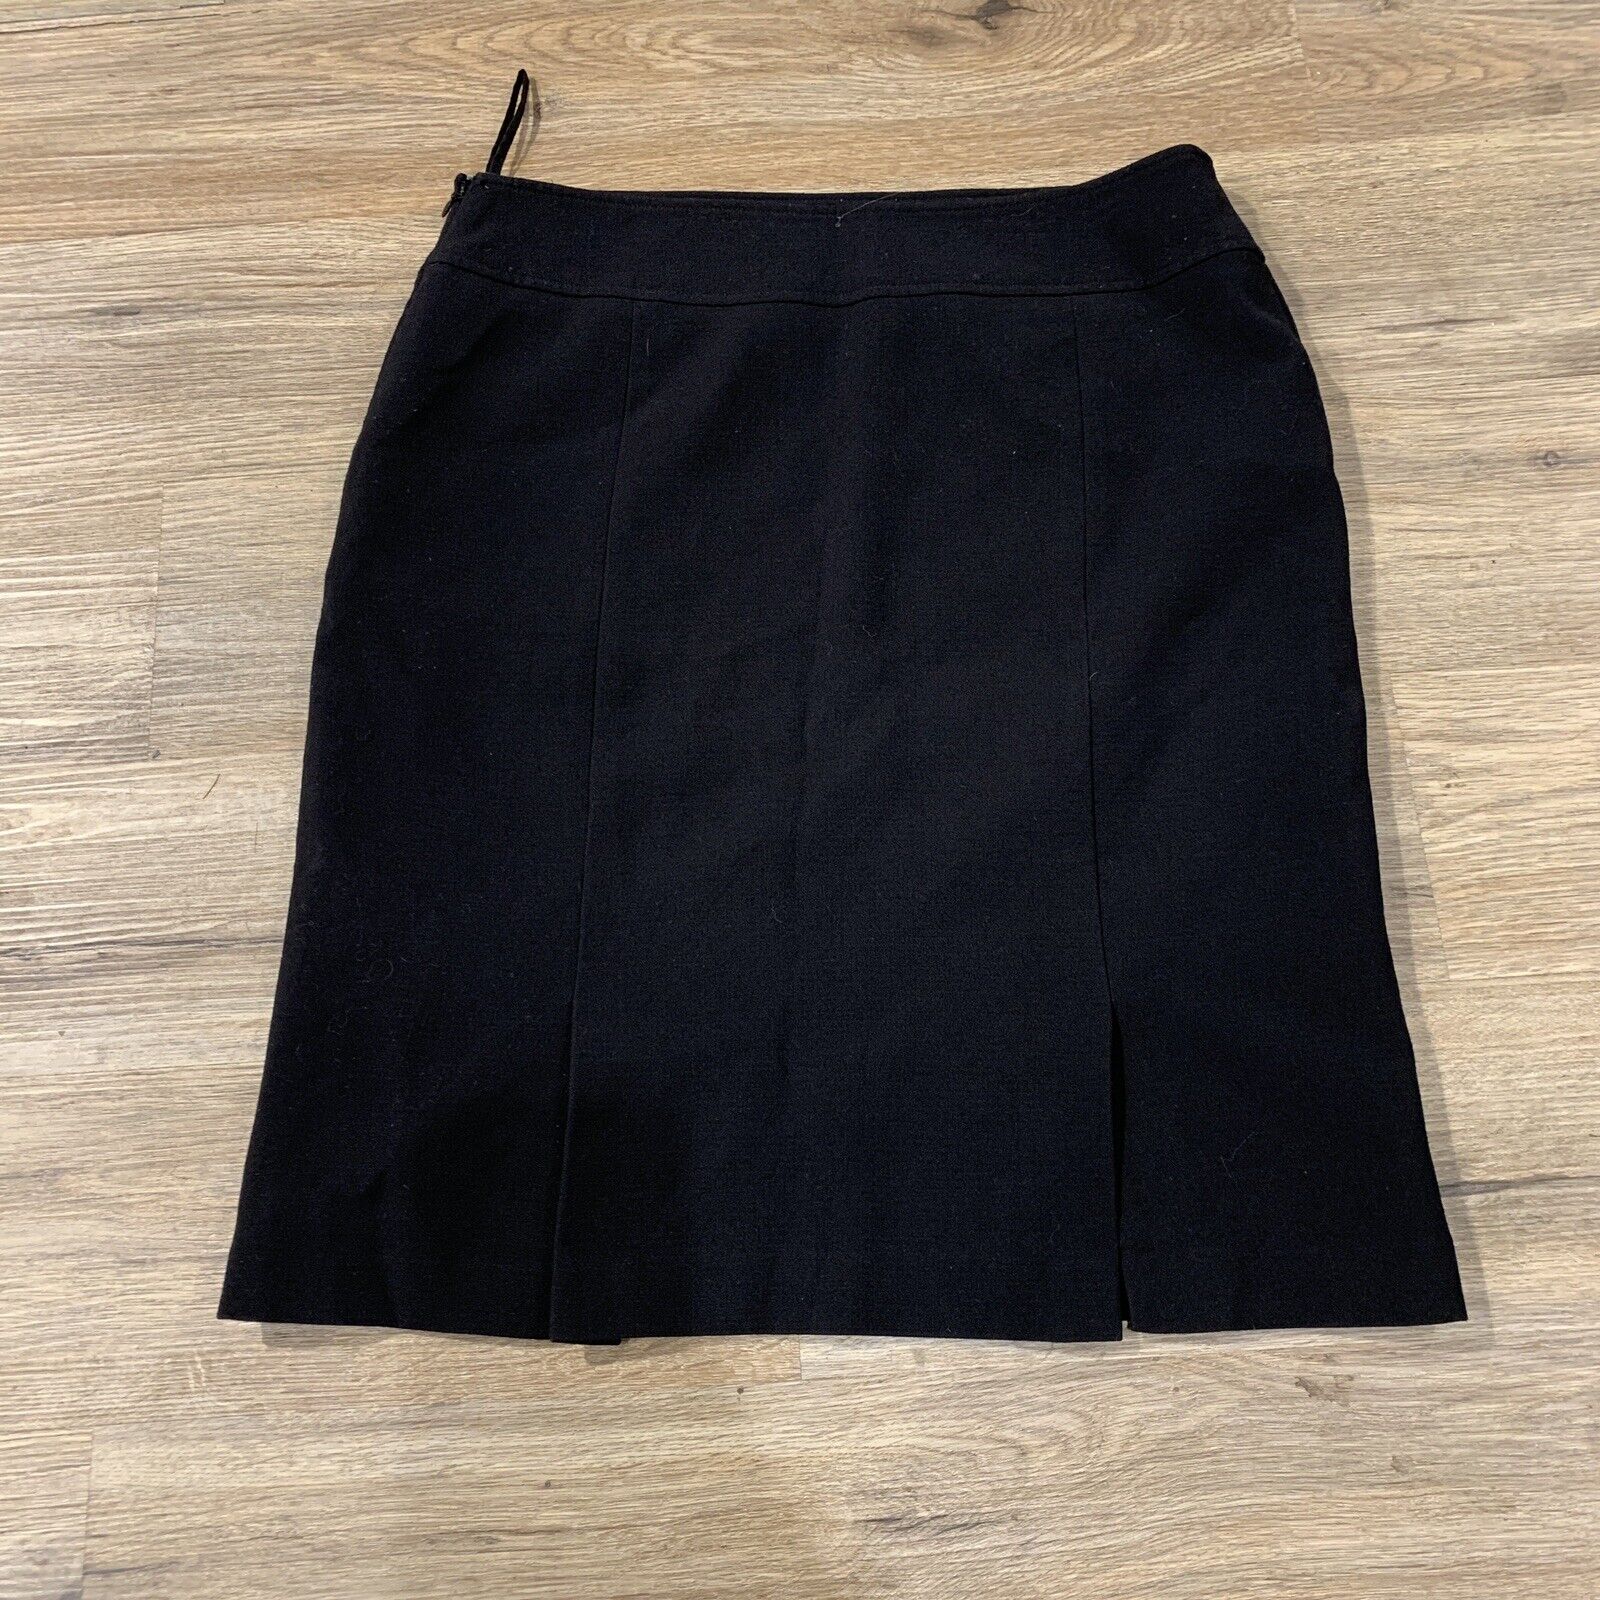 Black Pencil Skirt - image 5